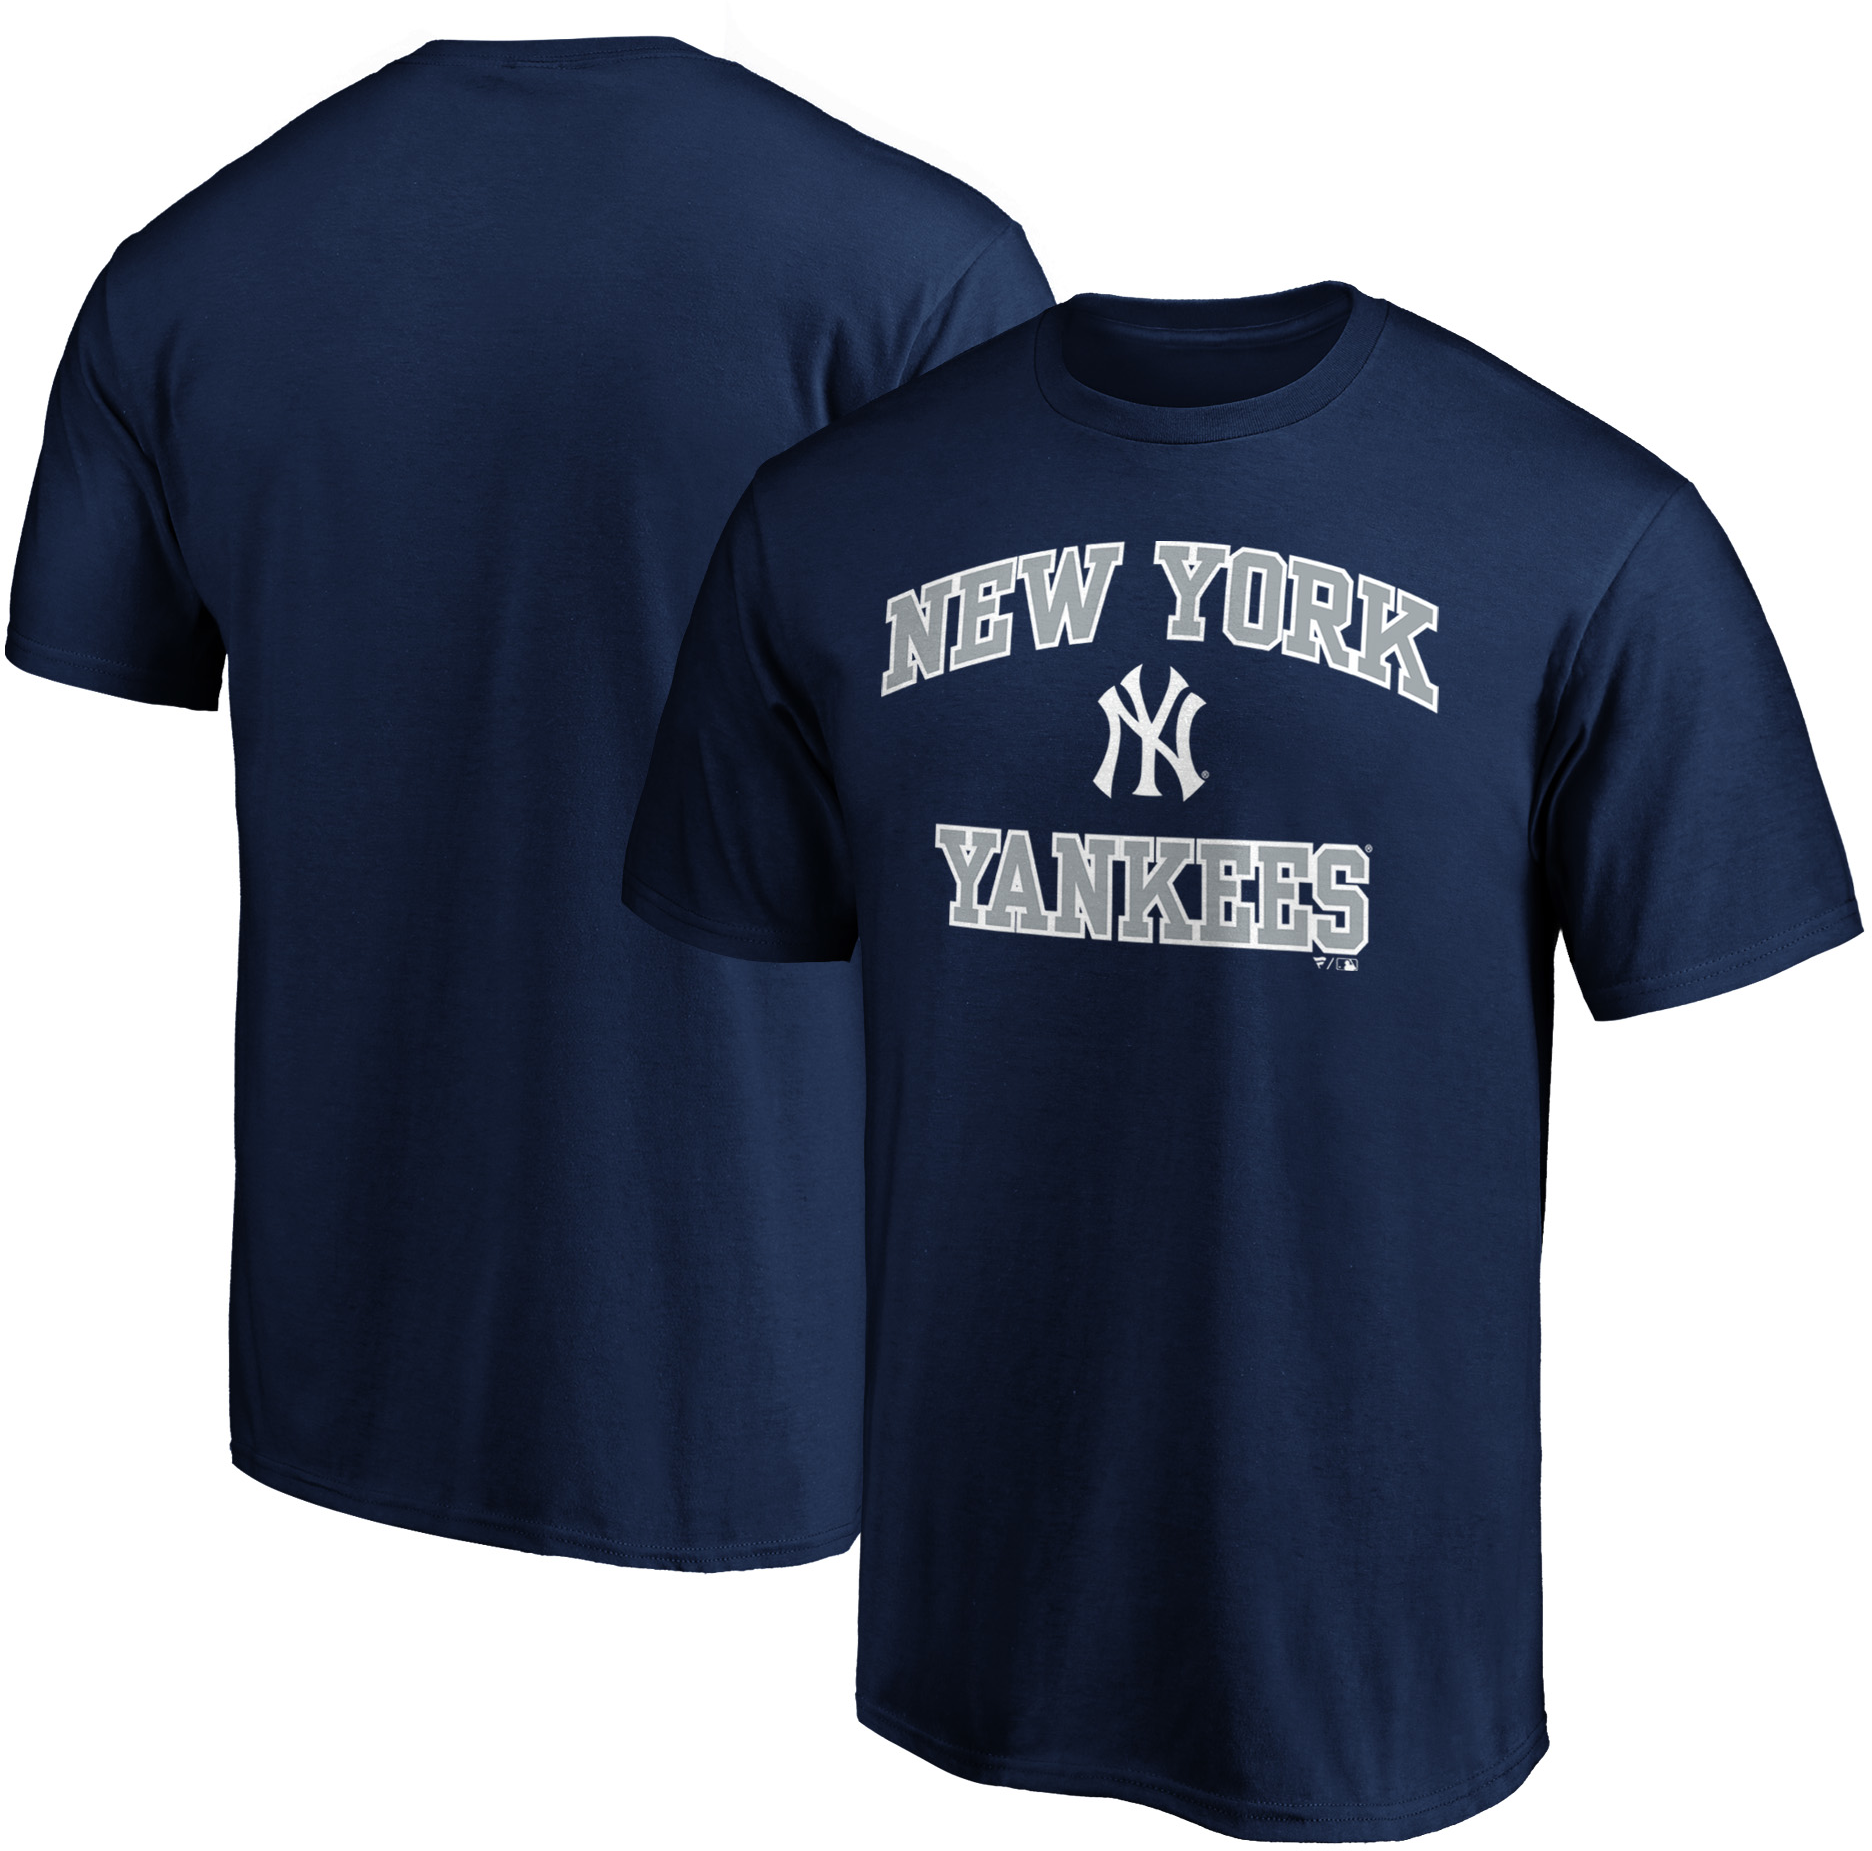 Jasson Dominguez Youth T-Shirt - Navy NY Yankees Kids T-Shirt